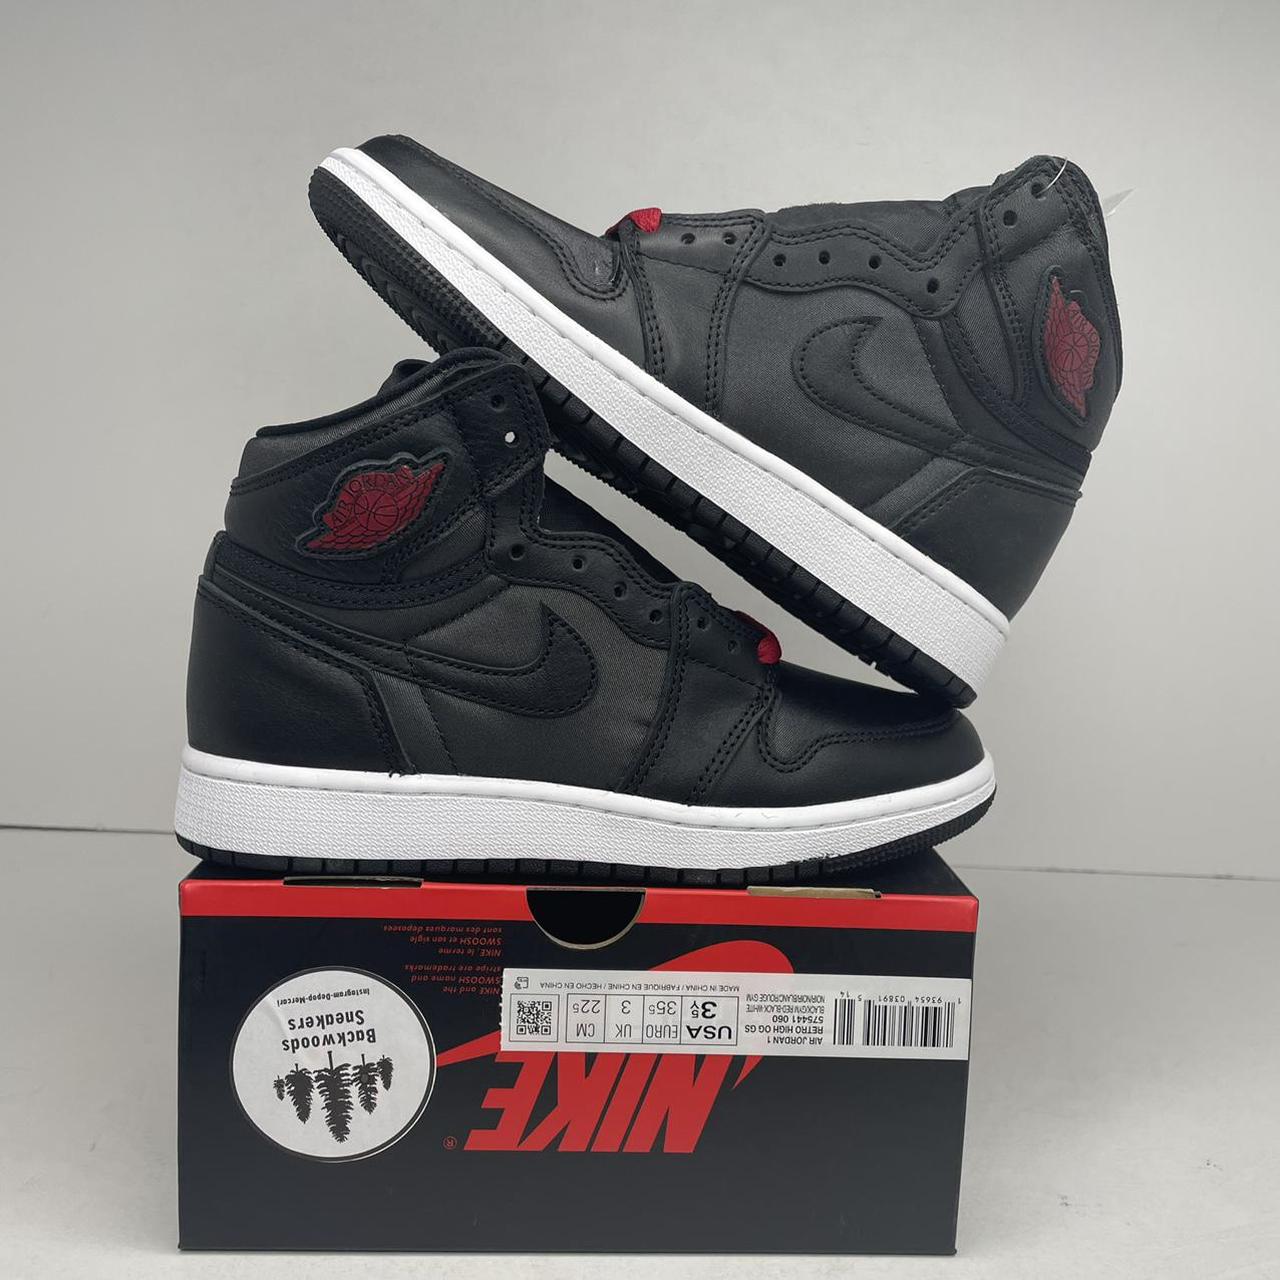 Nike Air Jordan 1 Retro GS “Black Satin” Gym Red - Depop